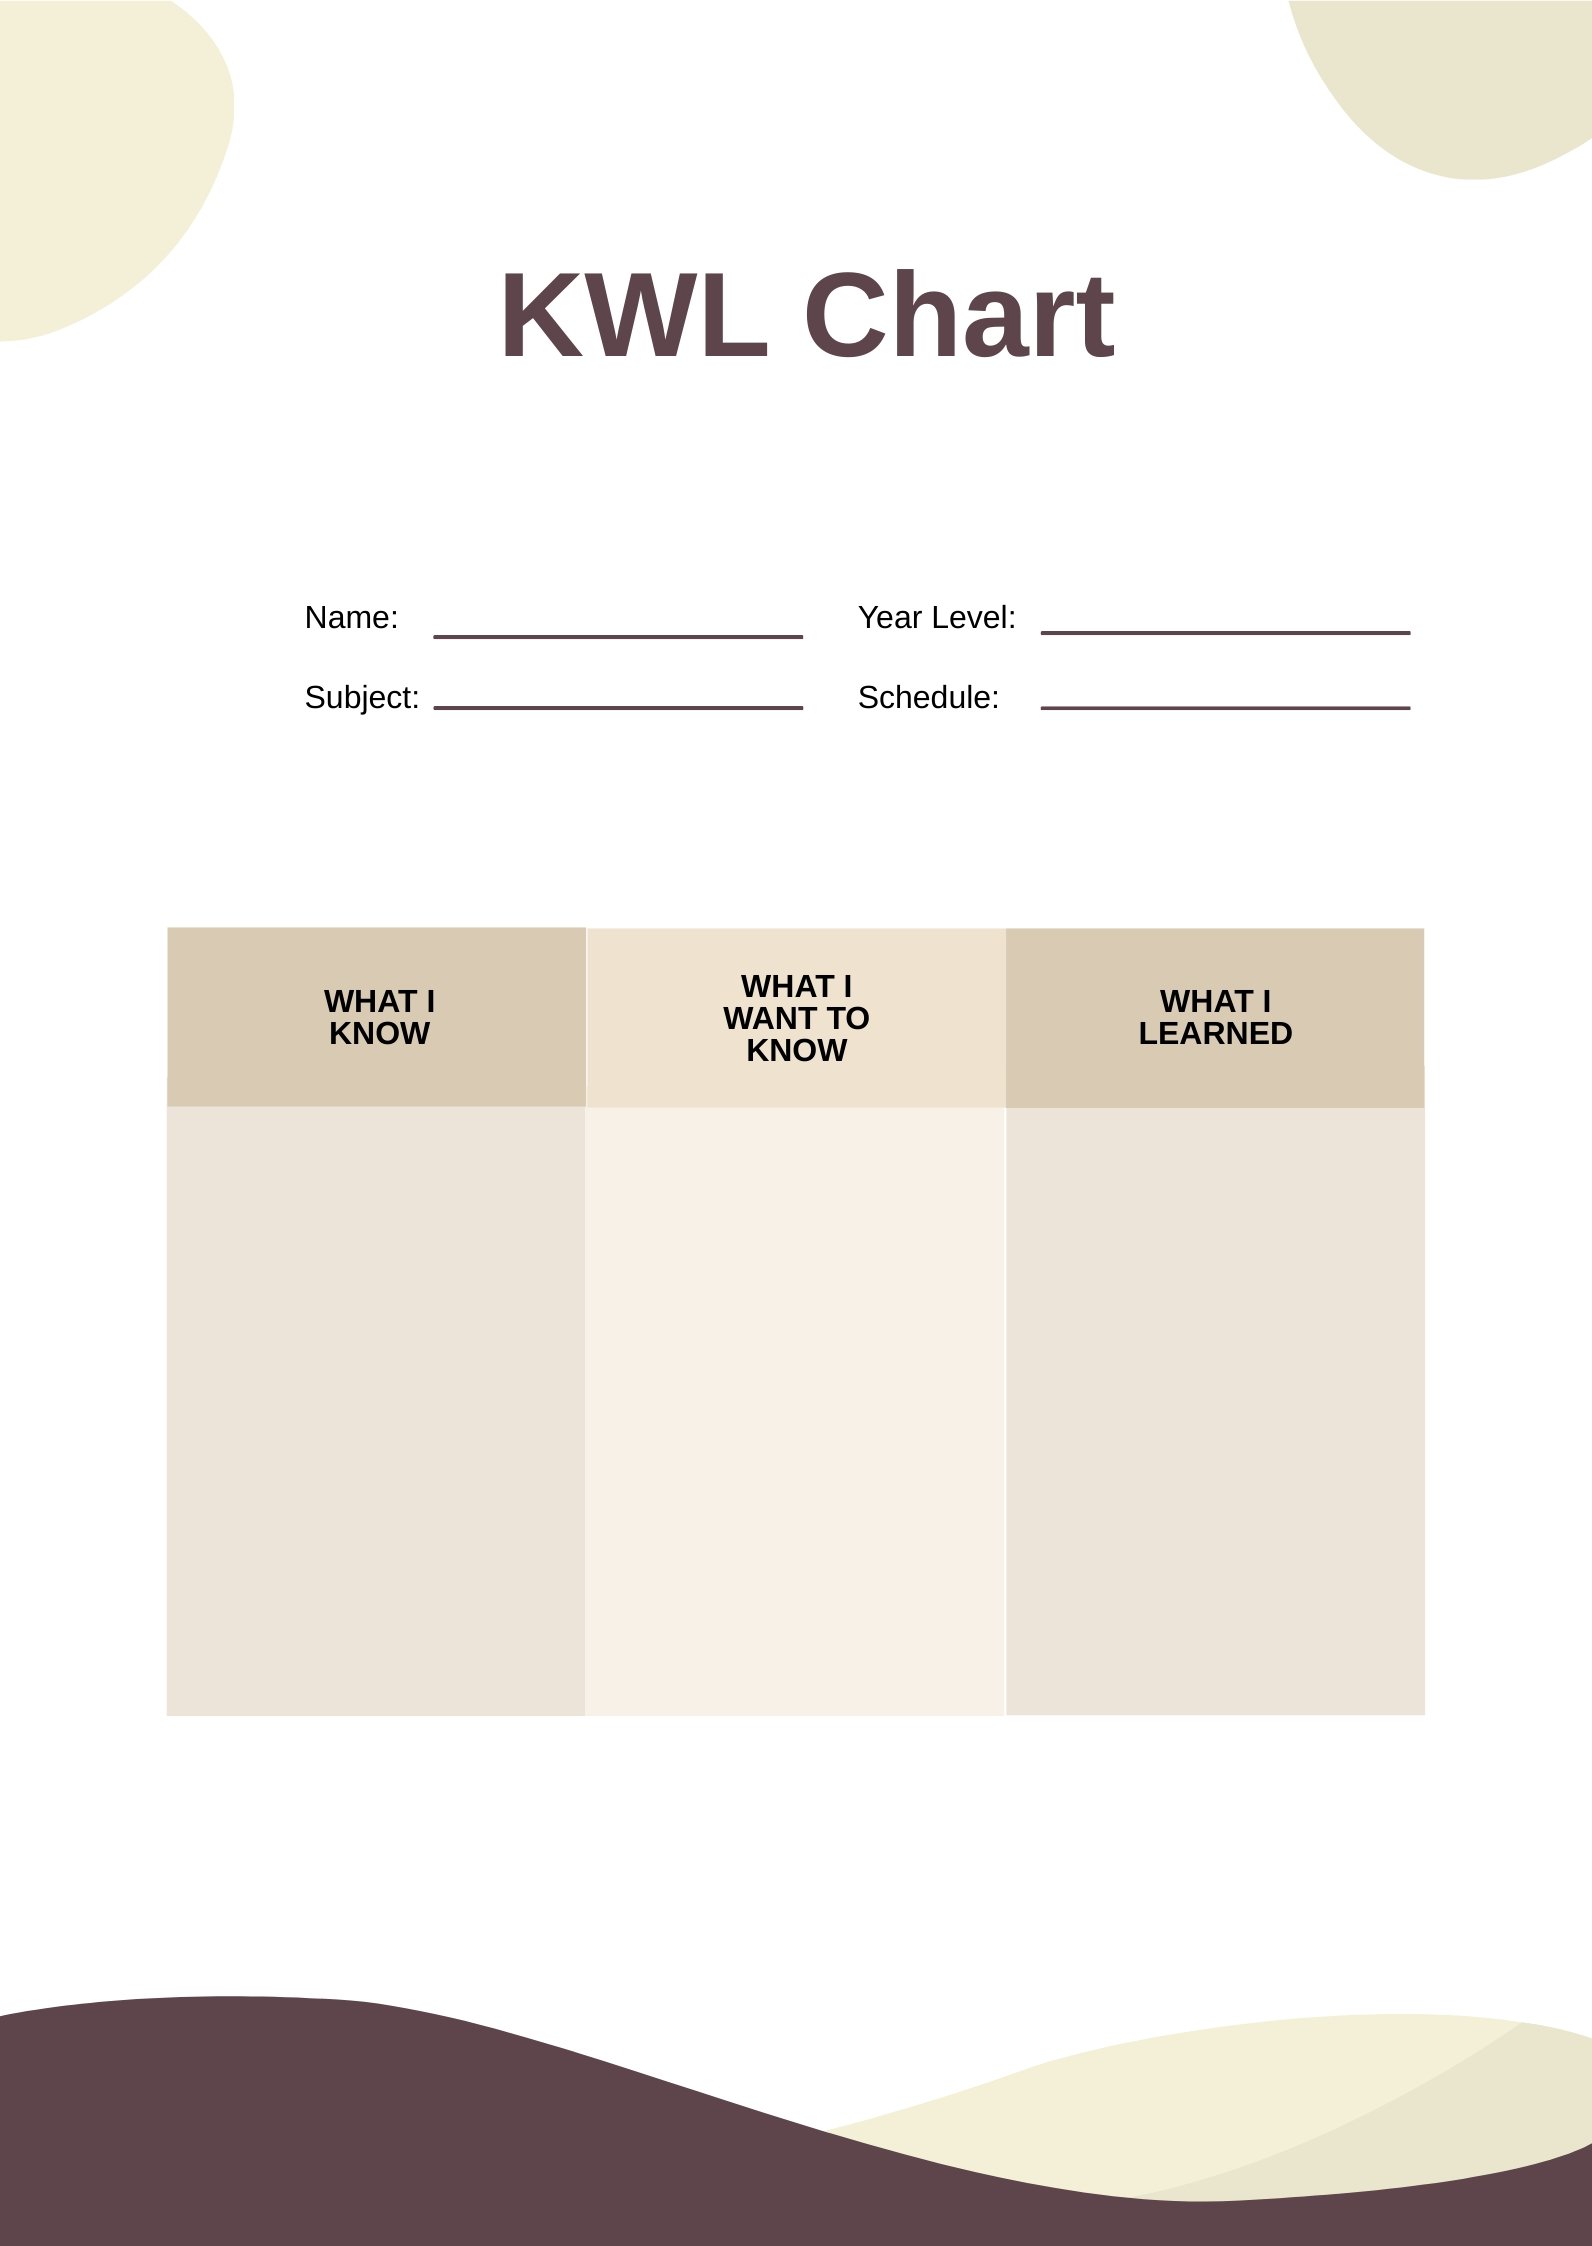 KWL Chart Template in PDF